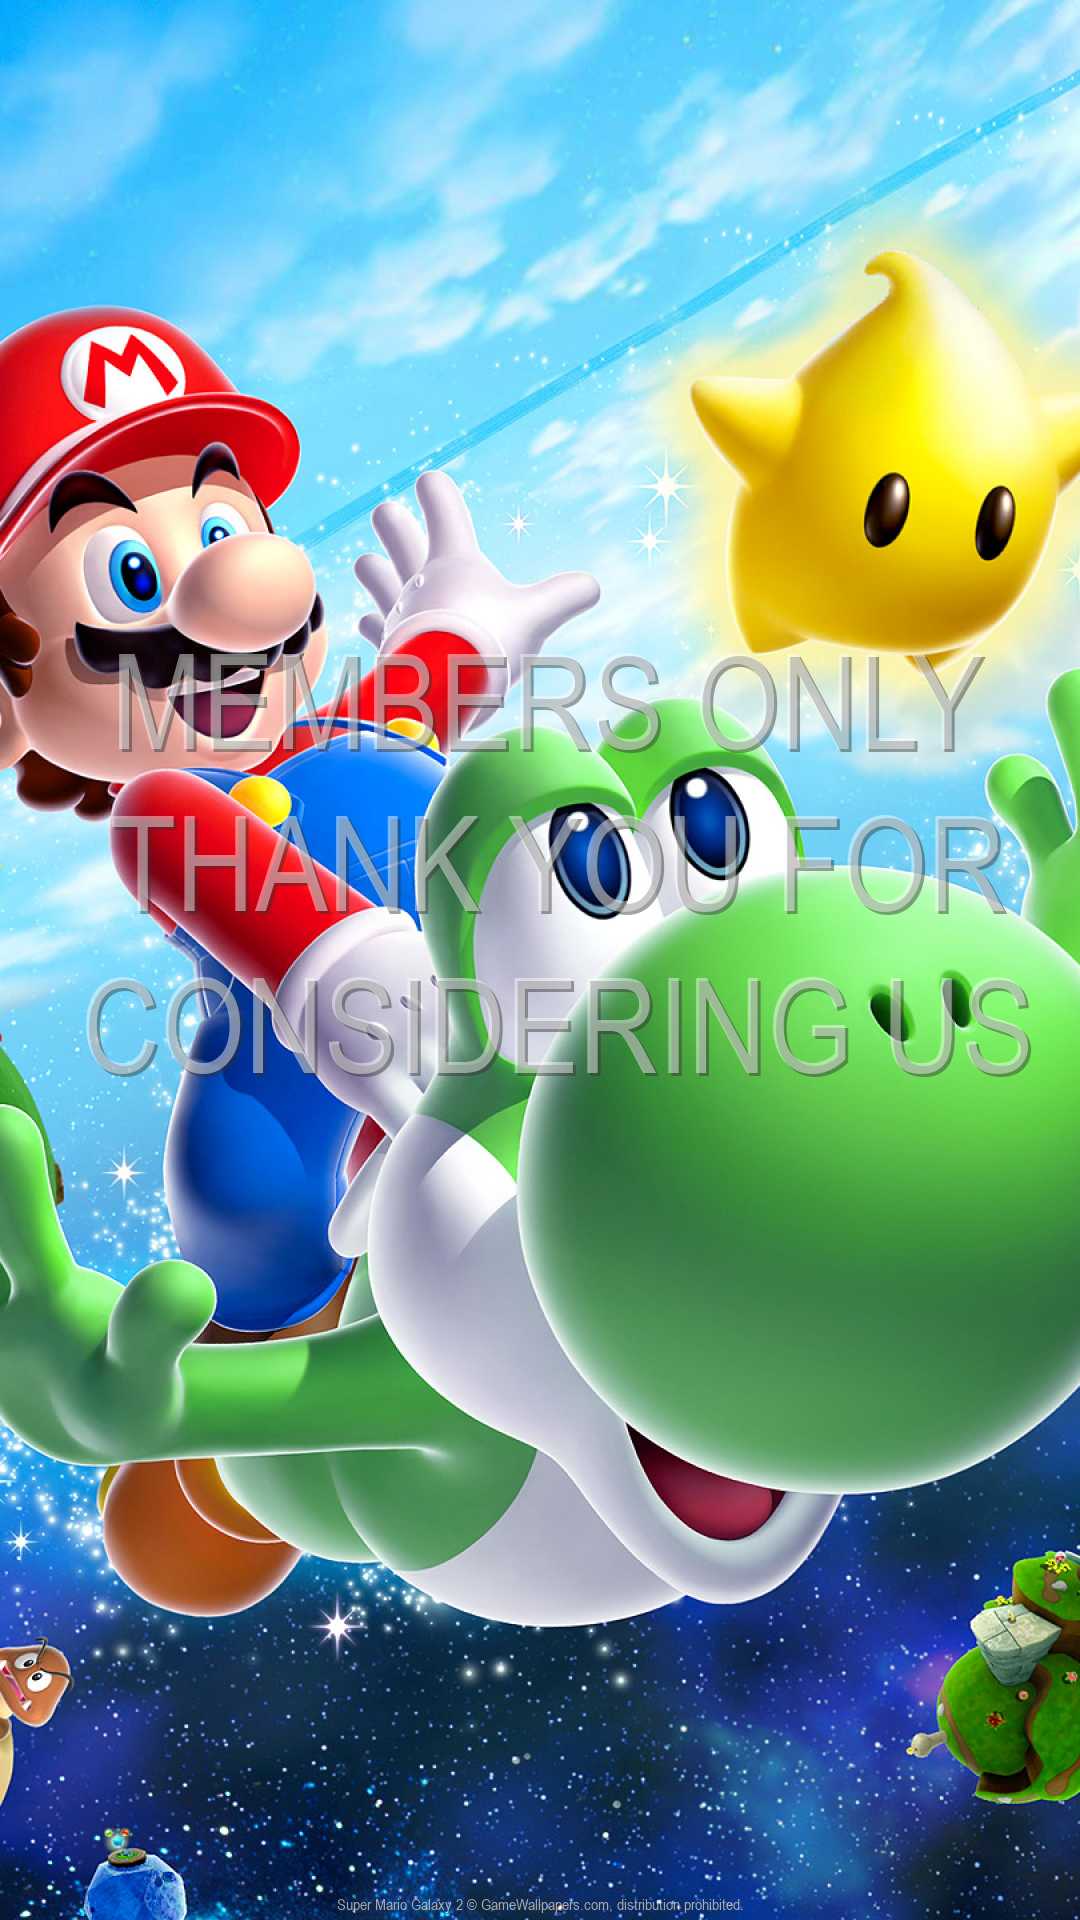 Super Mario Galaxy 2 1080p%20Vertical Mobile wallpaper or background 01